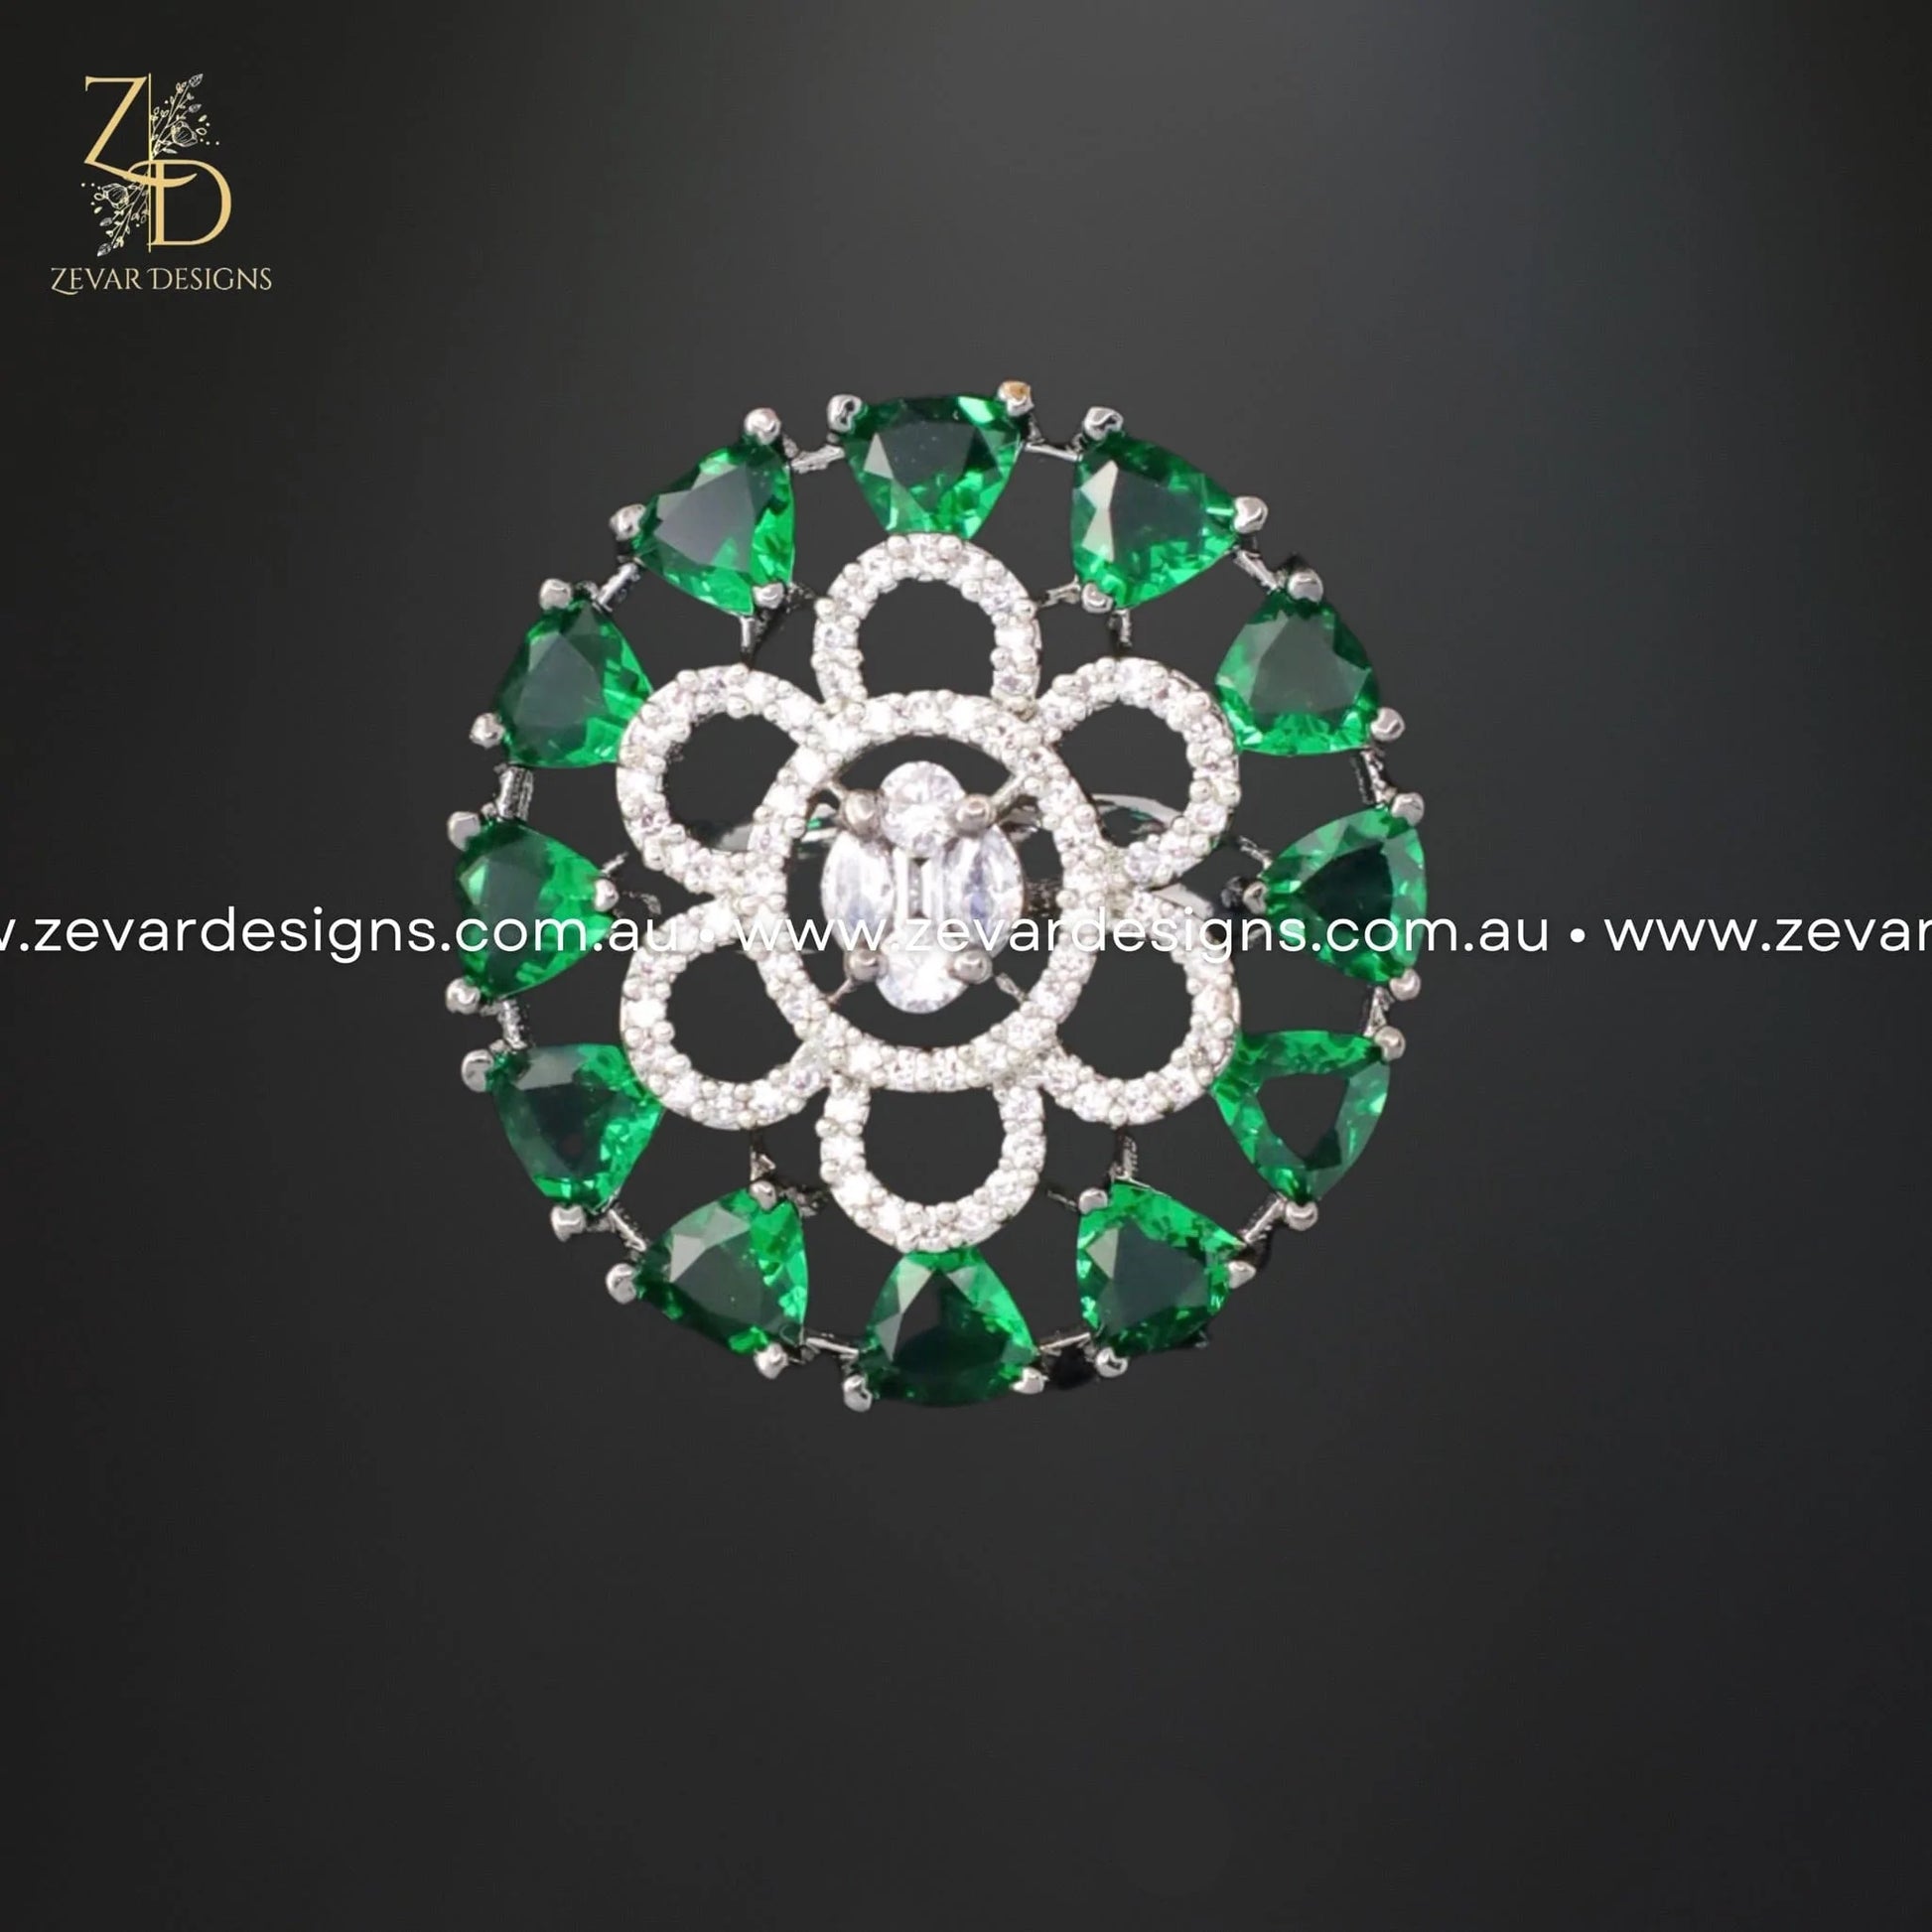 Zevar Designs Rings - AD AD/Zircon Ring - Emerald Green